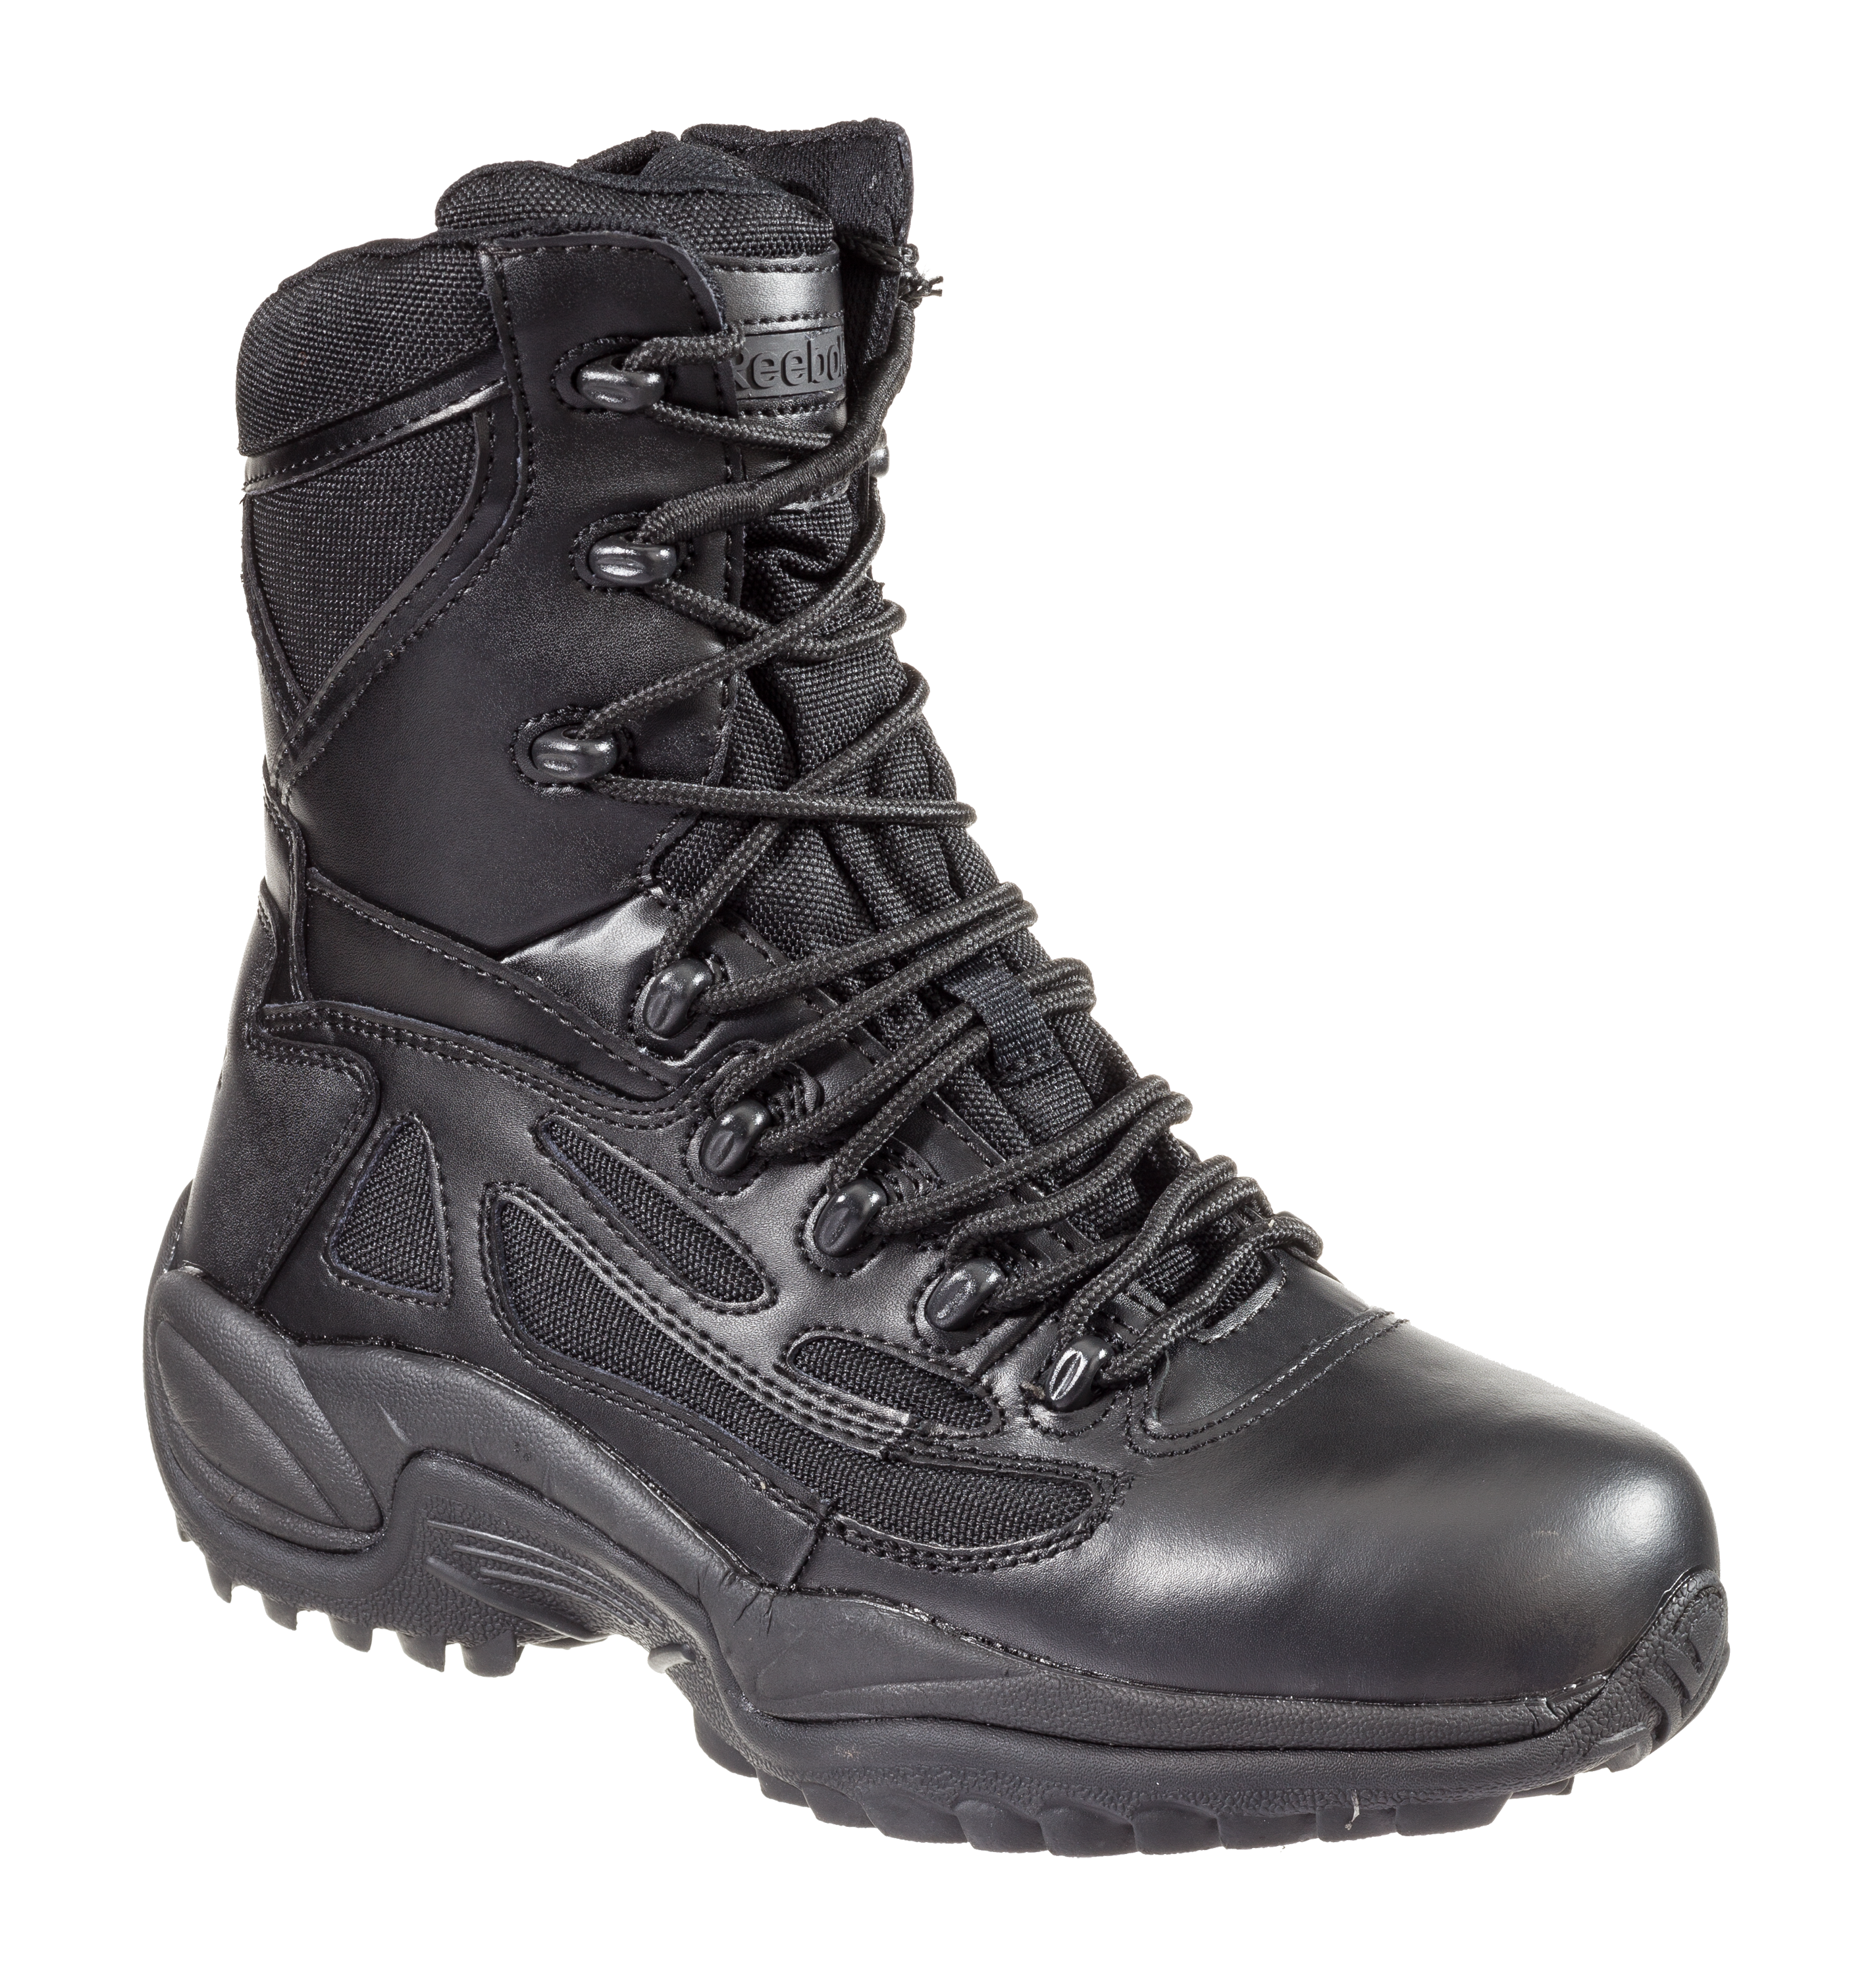 Reebok Rapid Response RB Waterproof Side-Zip Tactical Work Boots for Men - Black - 8M